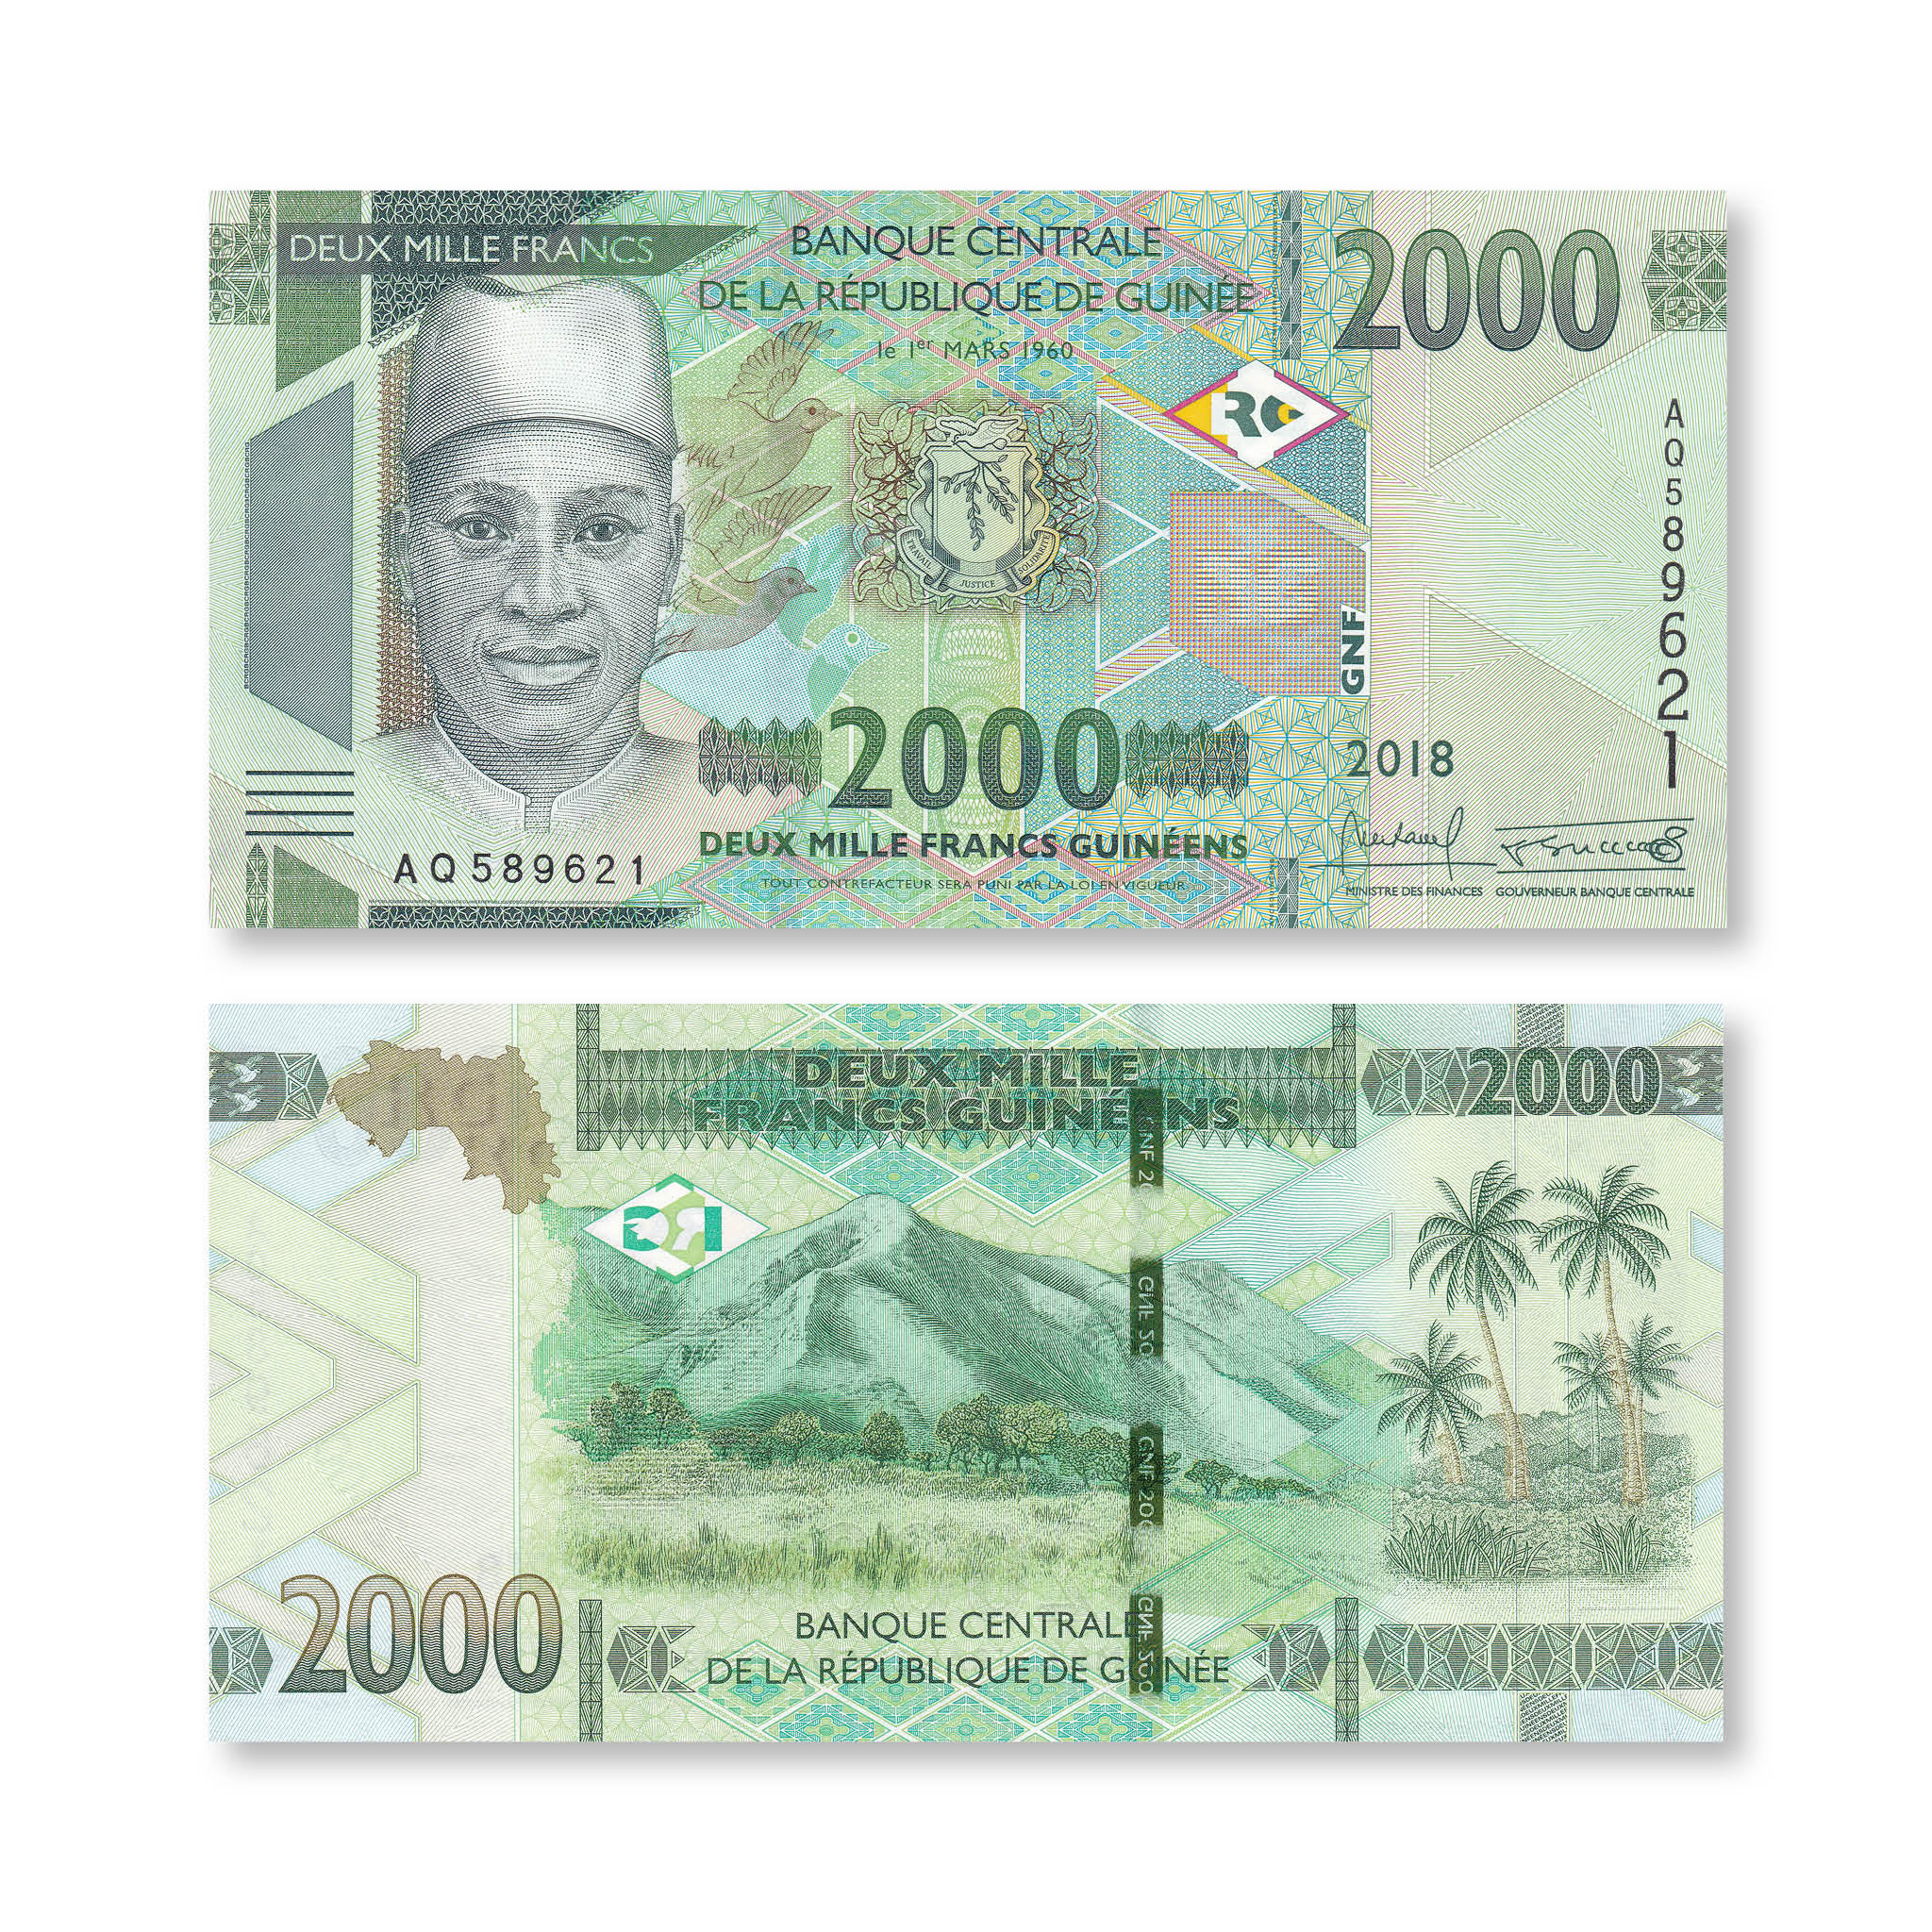 Guinea 2000 Francs, 2018, B342a, UNC - Robert's World Money - World Banknotes